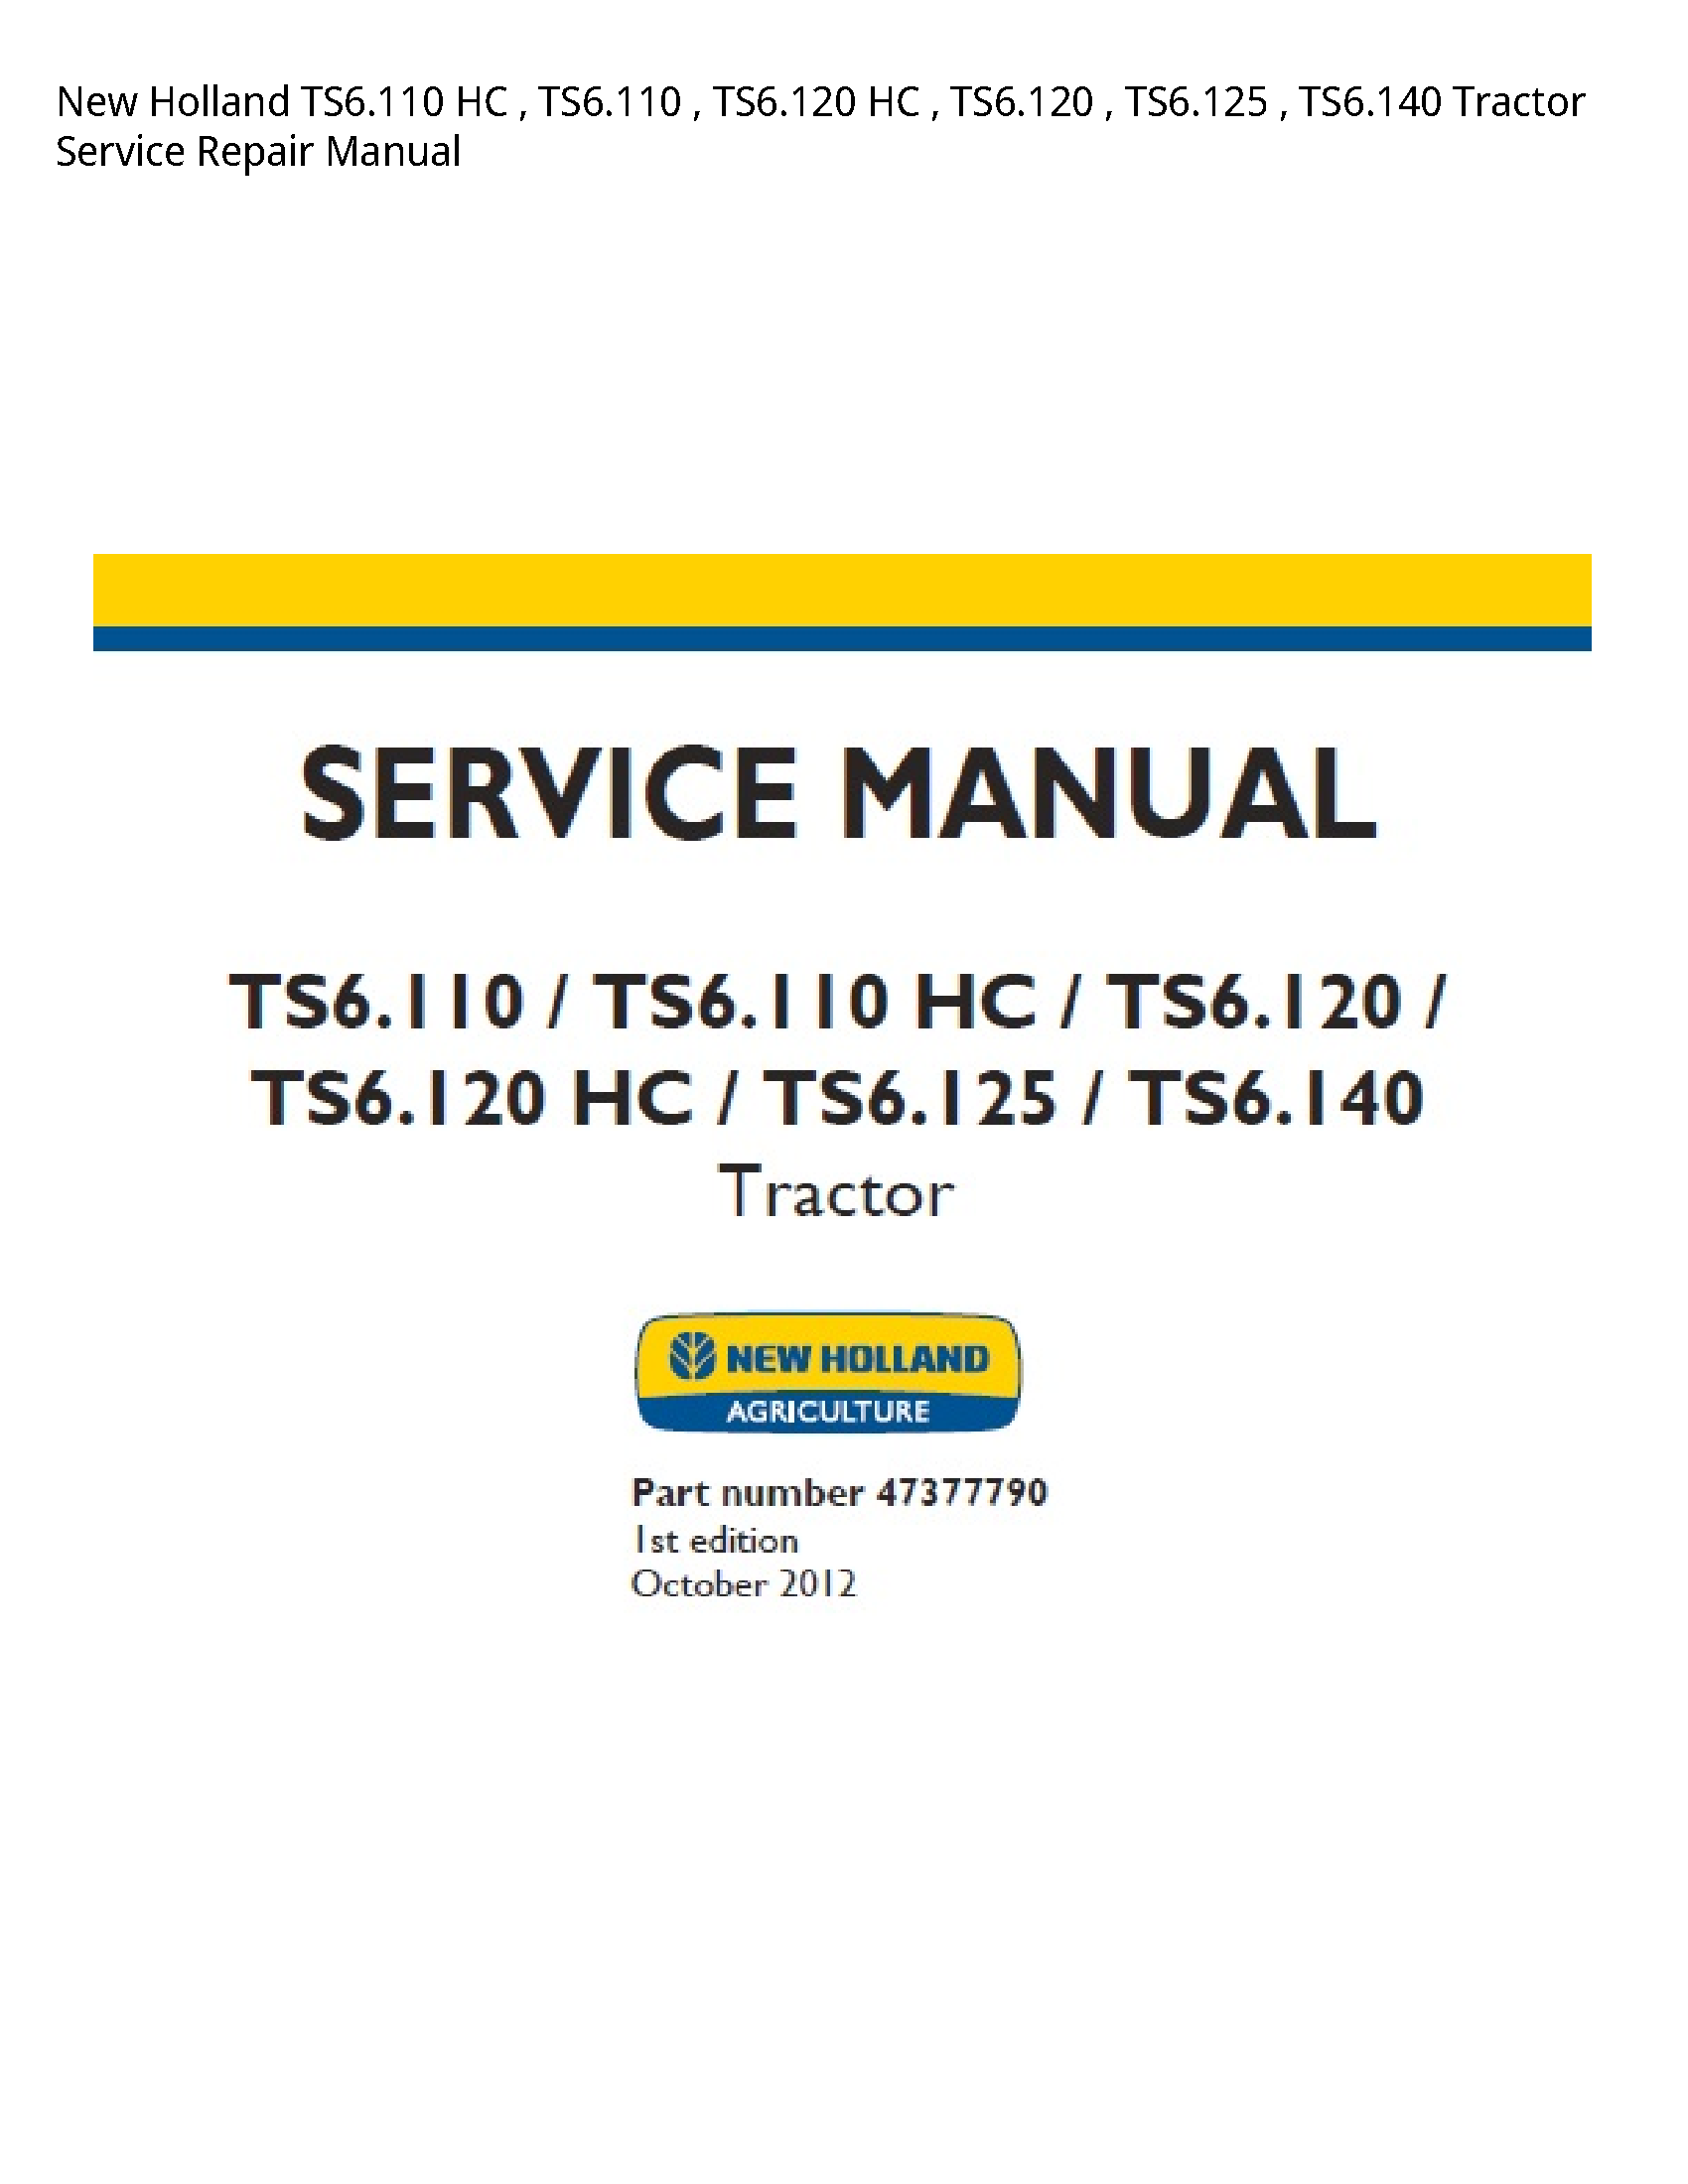 New Holland TS6.110 HC HC Tractor manual